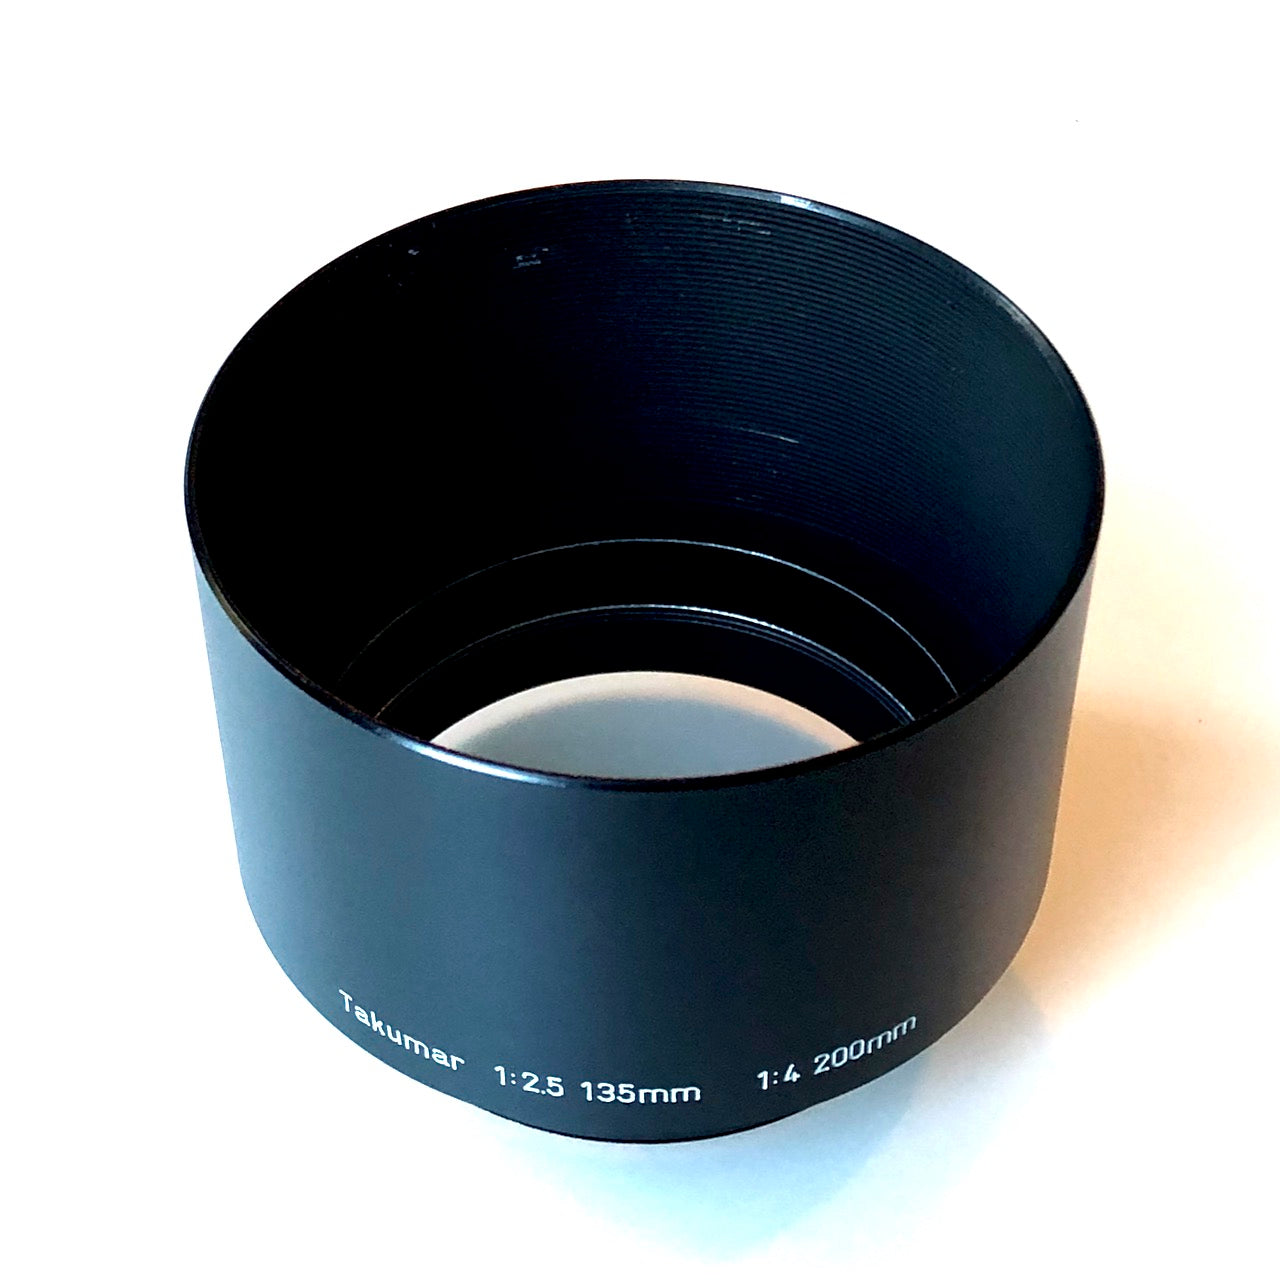 Asahi Takumar lens hood for 135mm f2.5 and 200mm f4